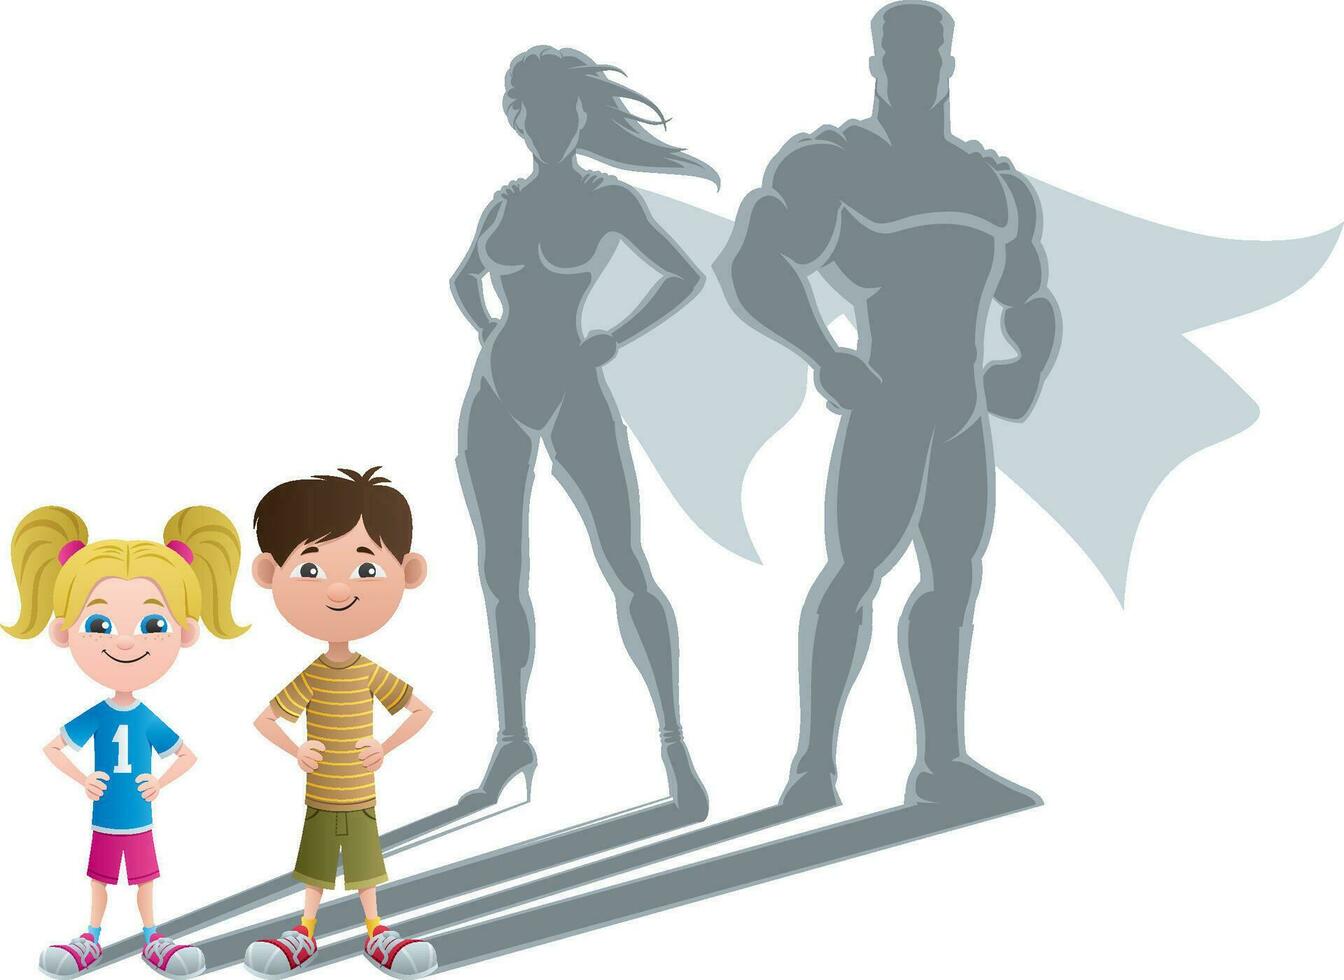 Kids Superhero Concept 2 vector